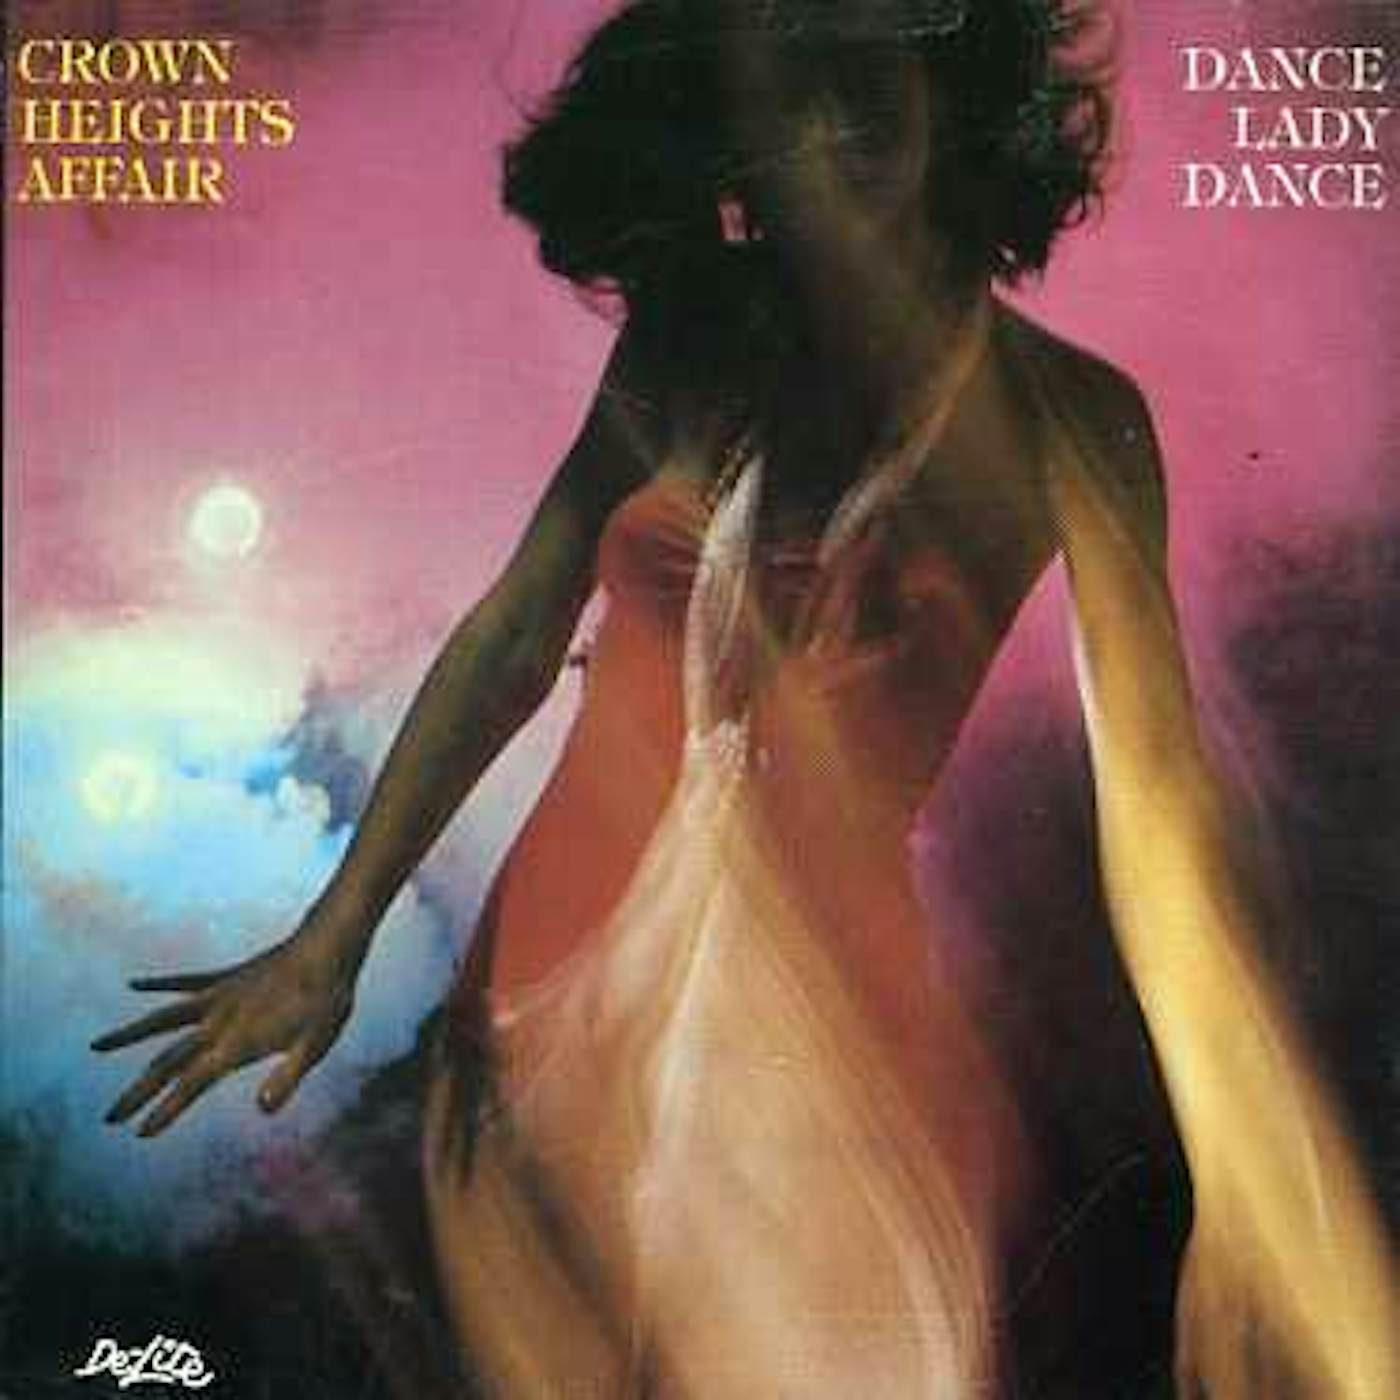 Crown Heights Affair DANCE LADY DANCE CD